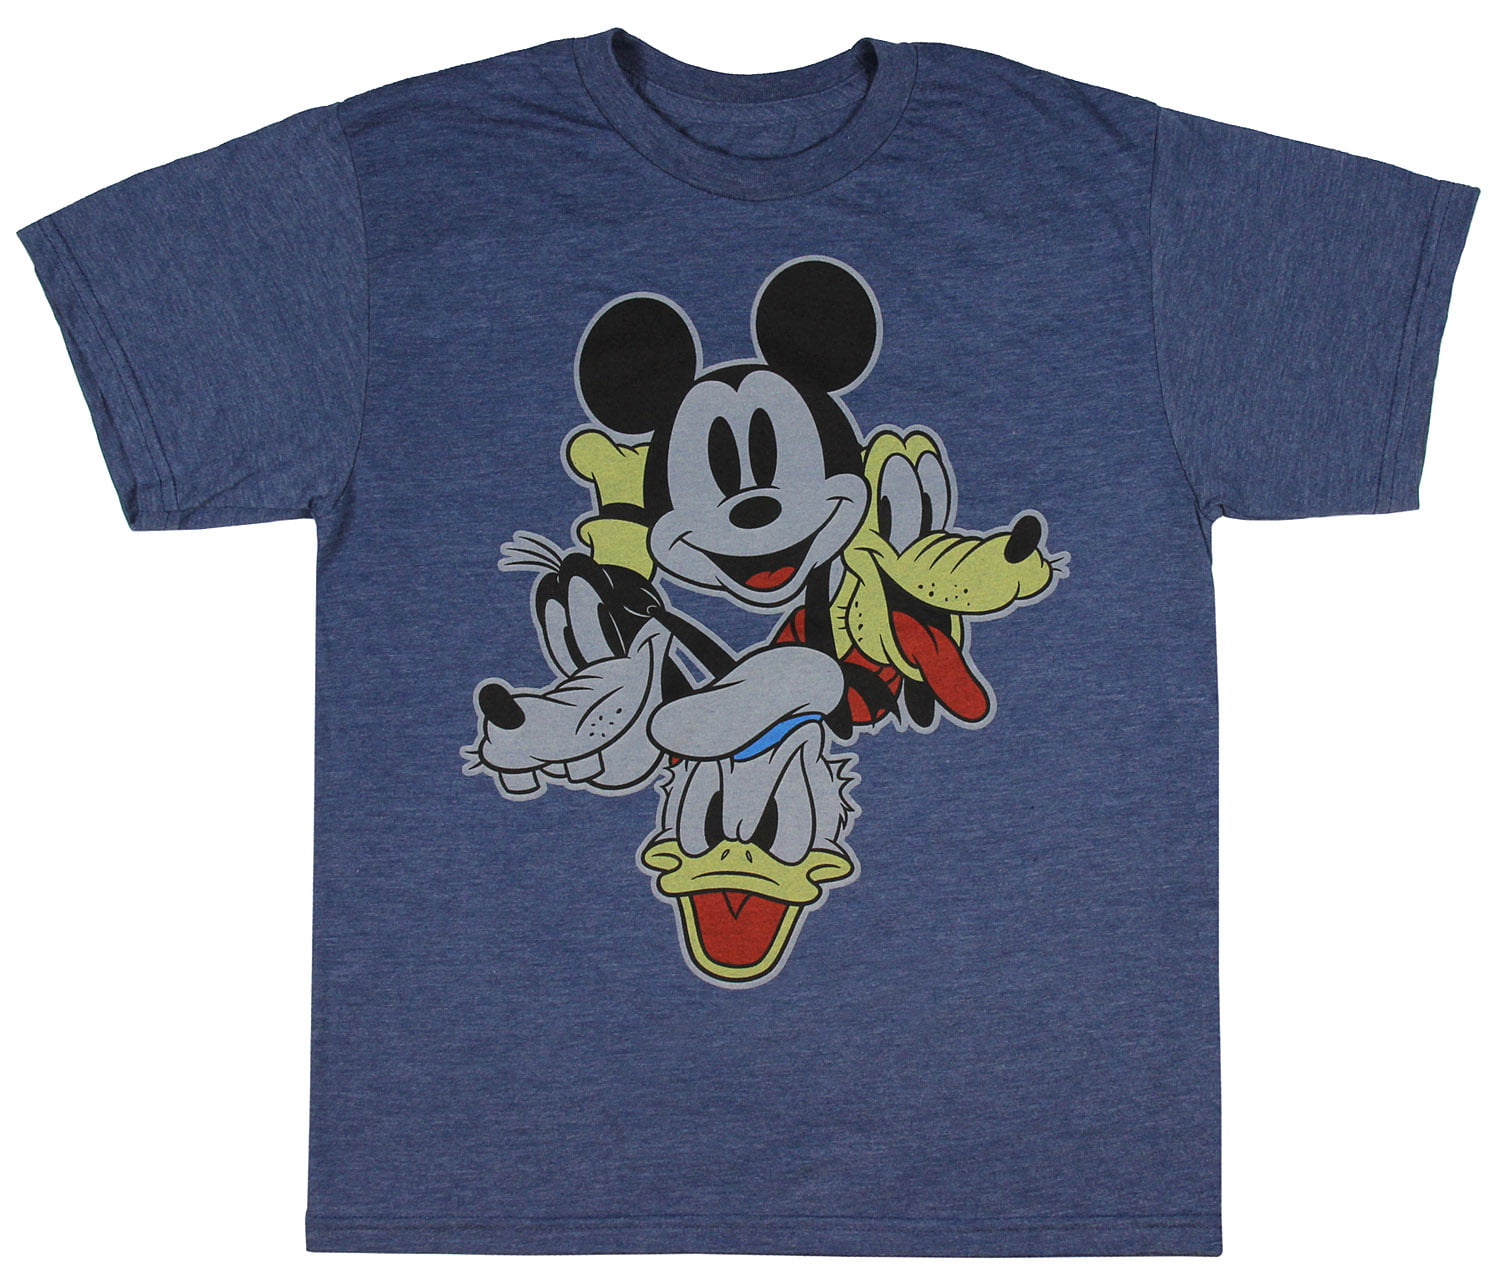 Disney Store Mickey Mouse Pluto Donald Goofy Boys T Shirt Size 2/3 5/6 7/8 10/12 